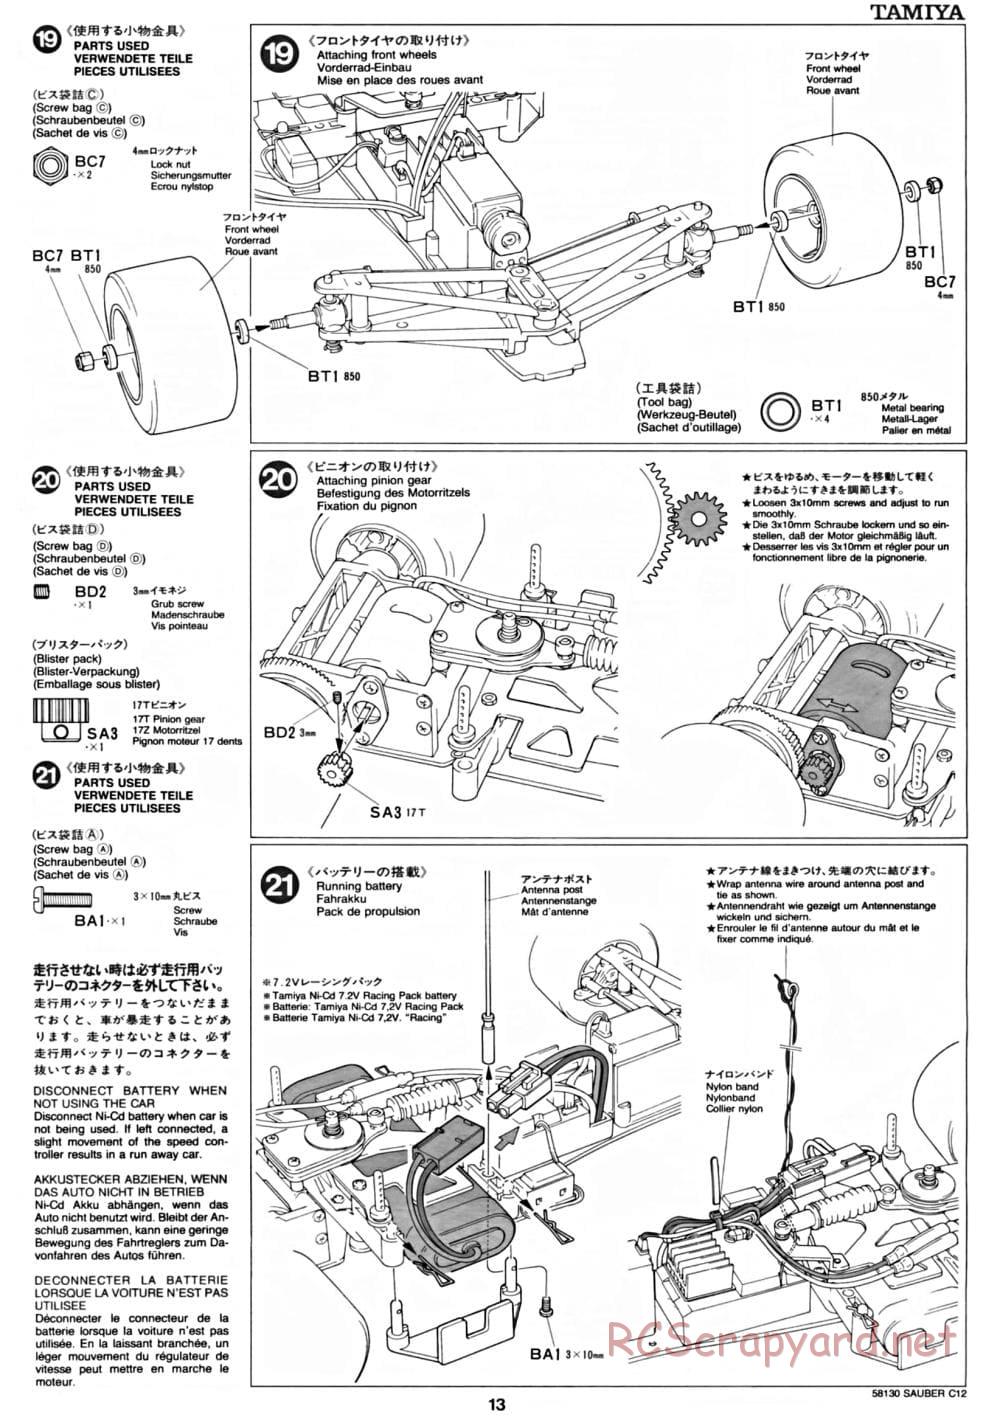 Tamiya - Sauber C12 - F103 Chassis - Manual - Page 13